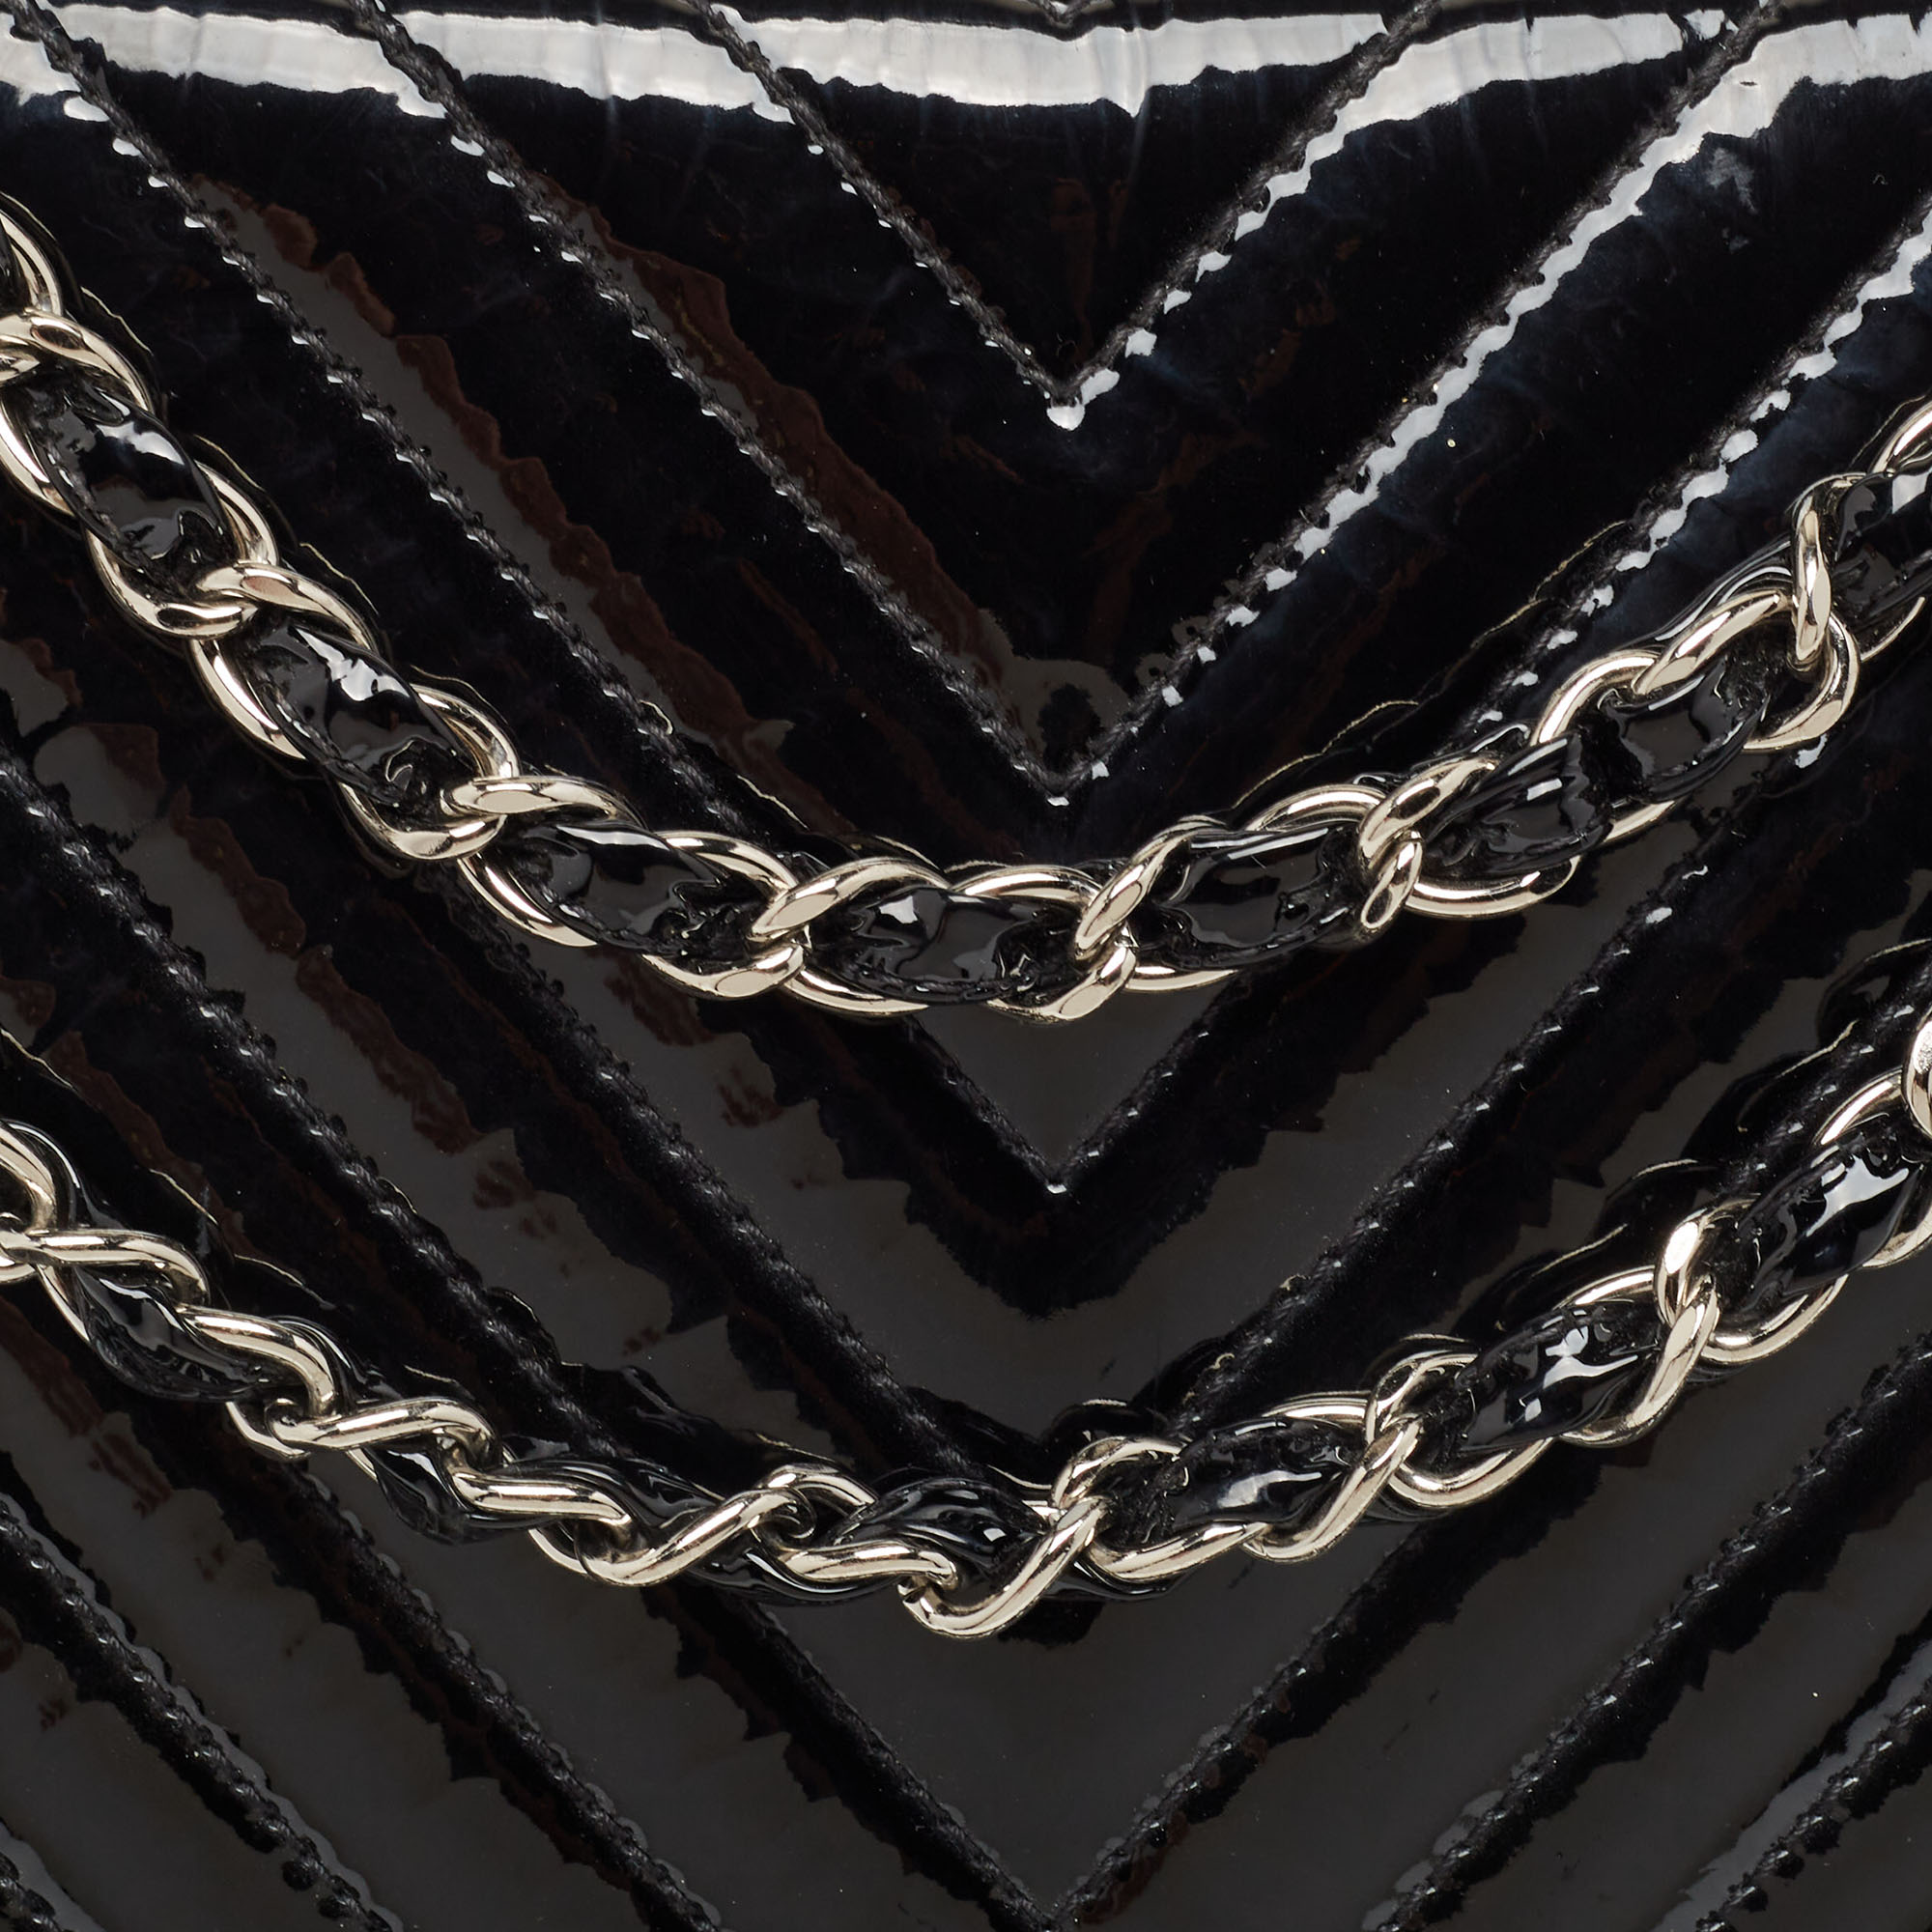 Chanel Black Chevron Patent Leather Maxi Classic Flap Bag